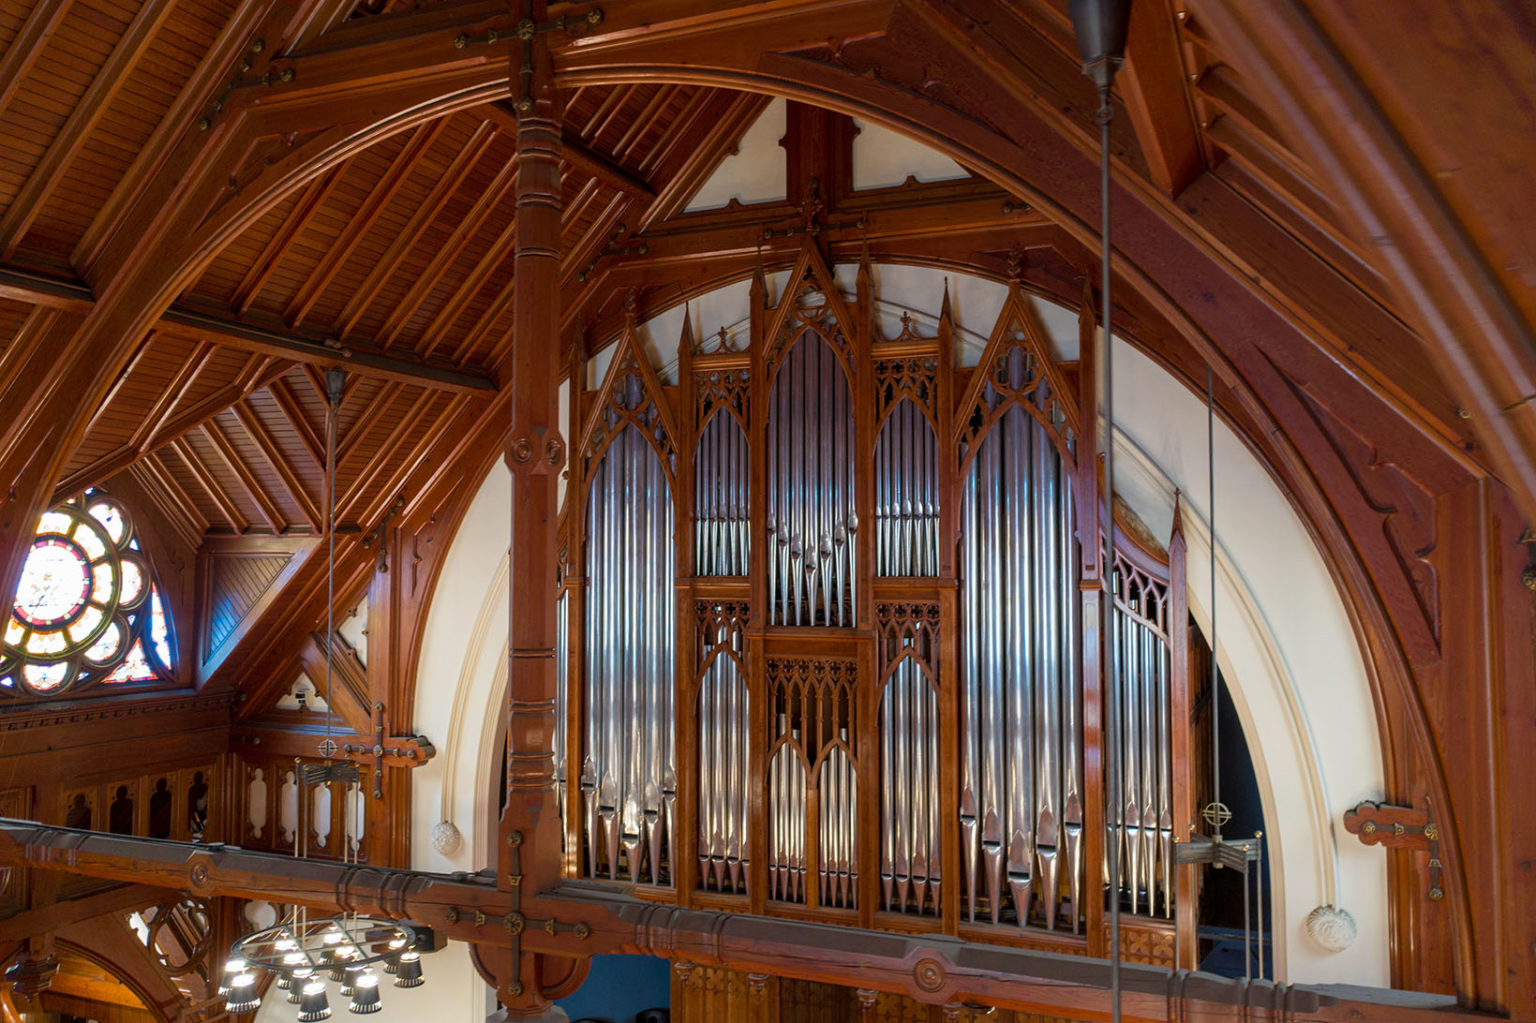 Jaeckel Pipe Organ – First Presbyterian Church of Portland